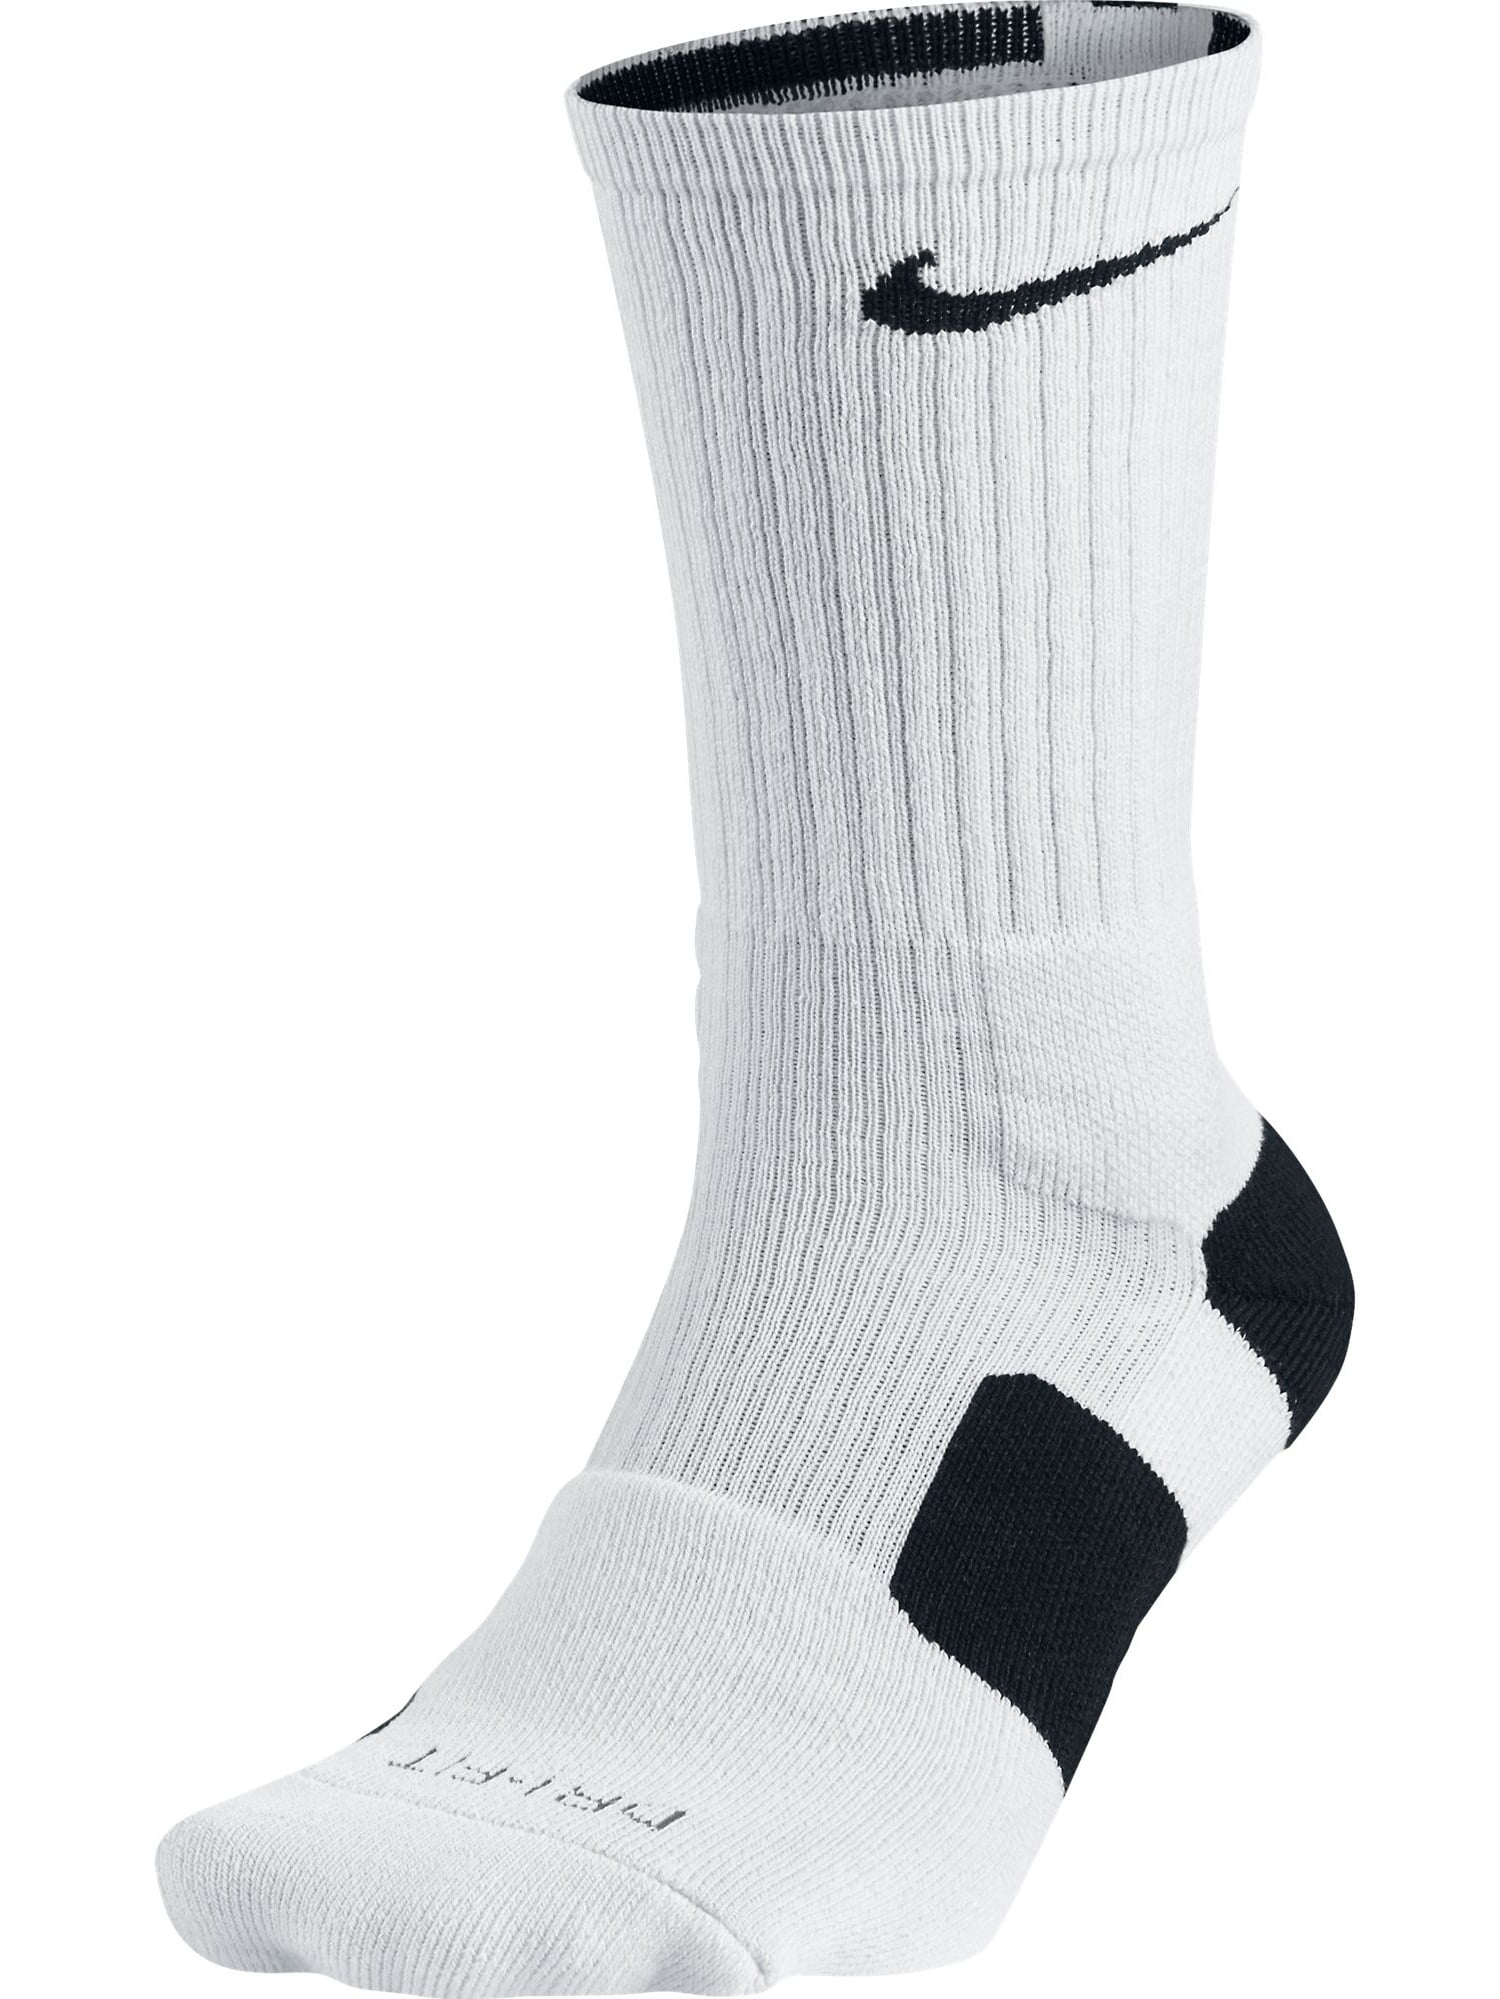 Sin alterar té viuda Nike Dri-FIT Elite Crew Men's Basketball Socks White/Black sx3629-107 -  Walmart.com